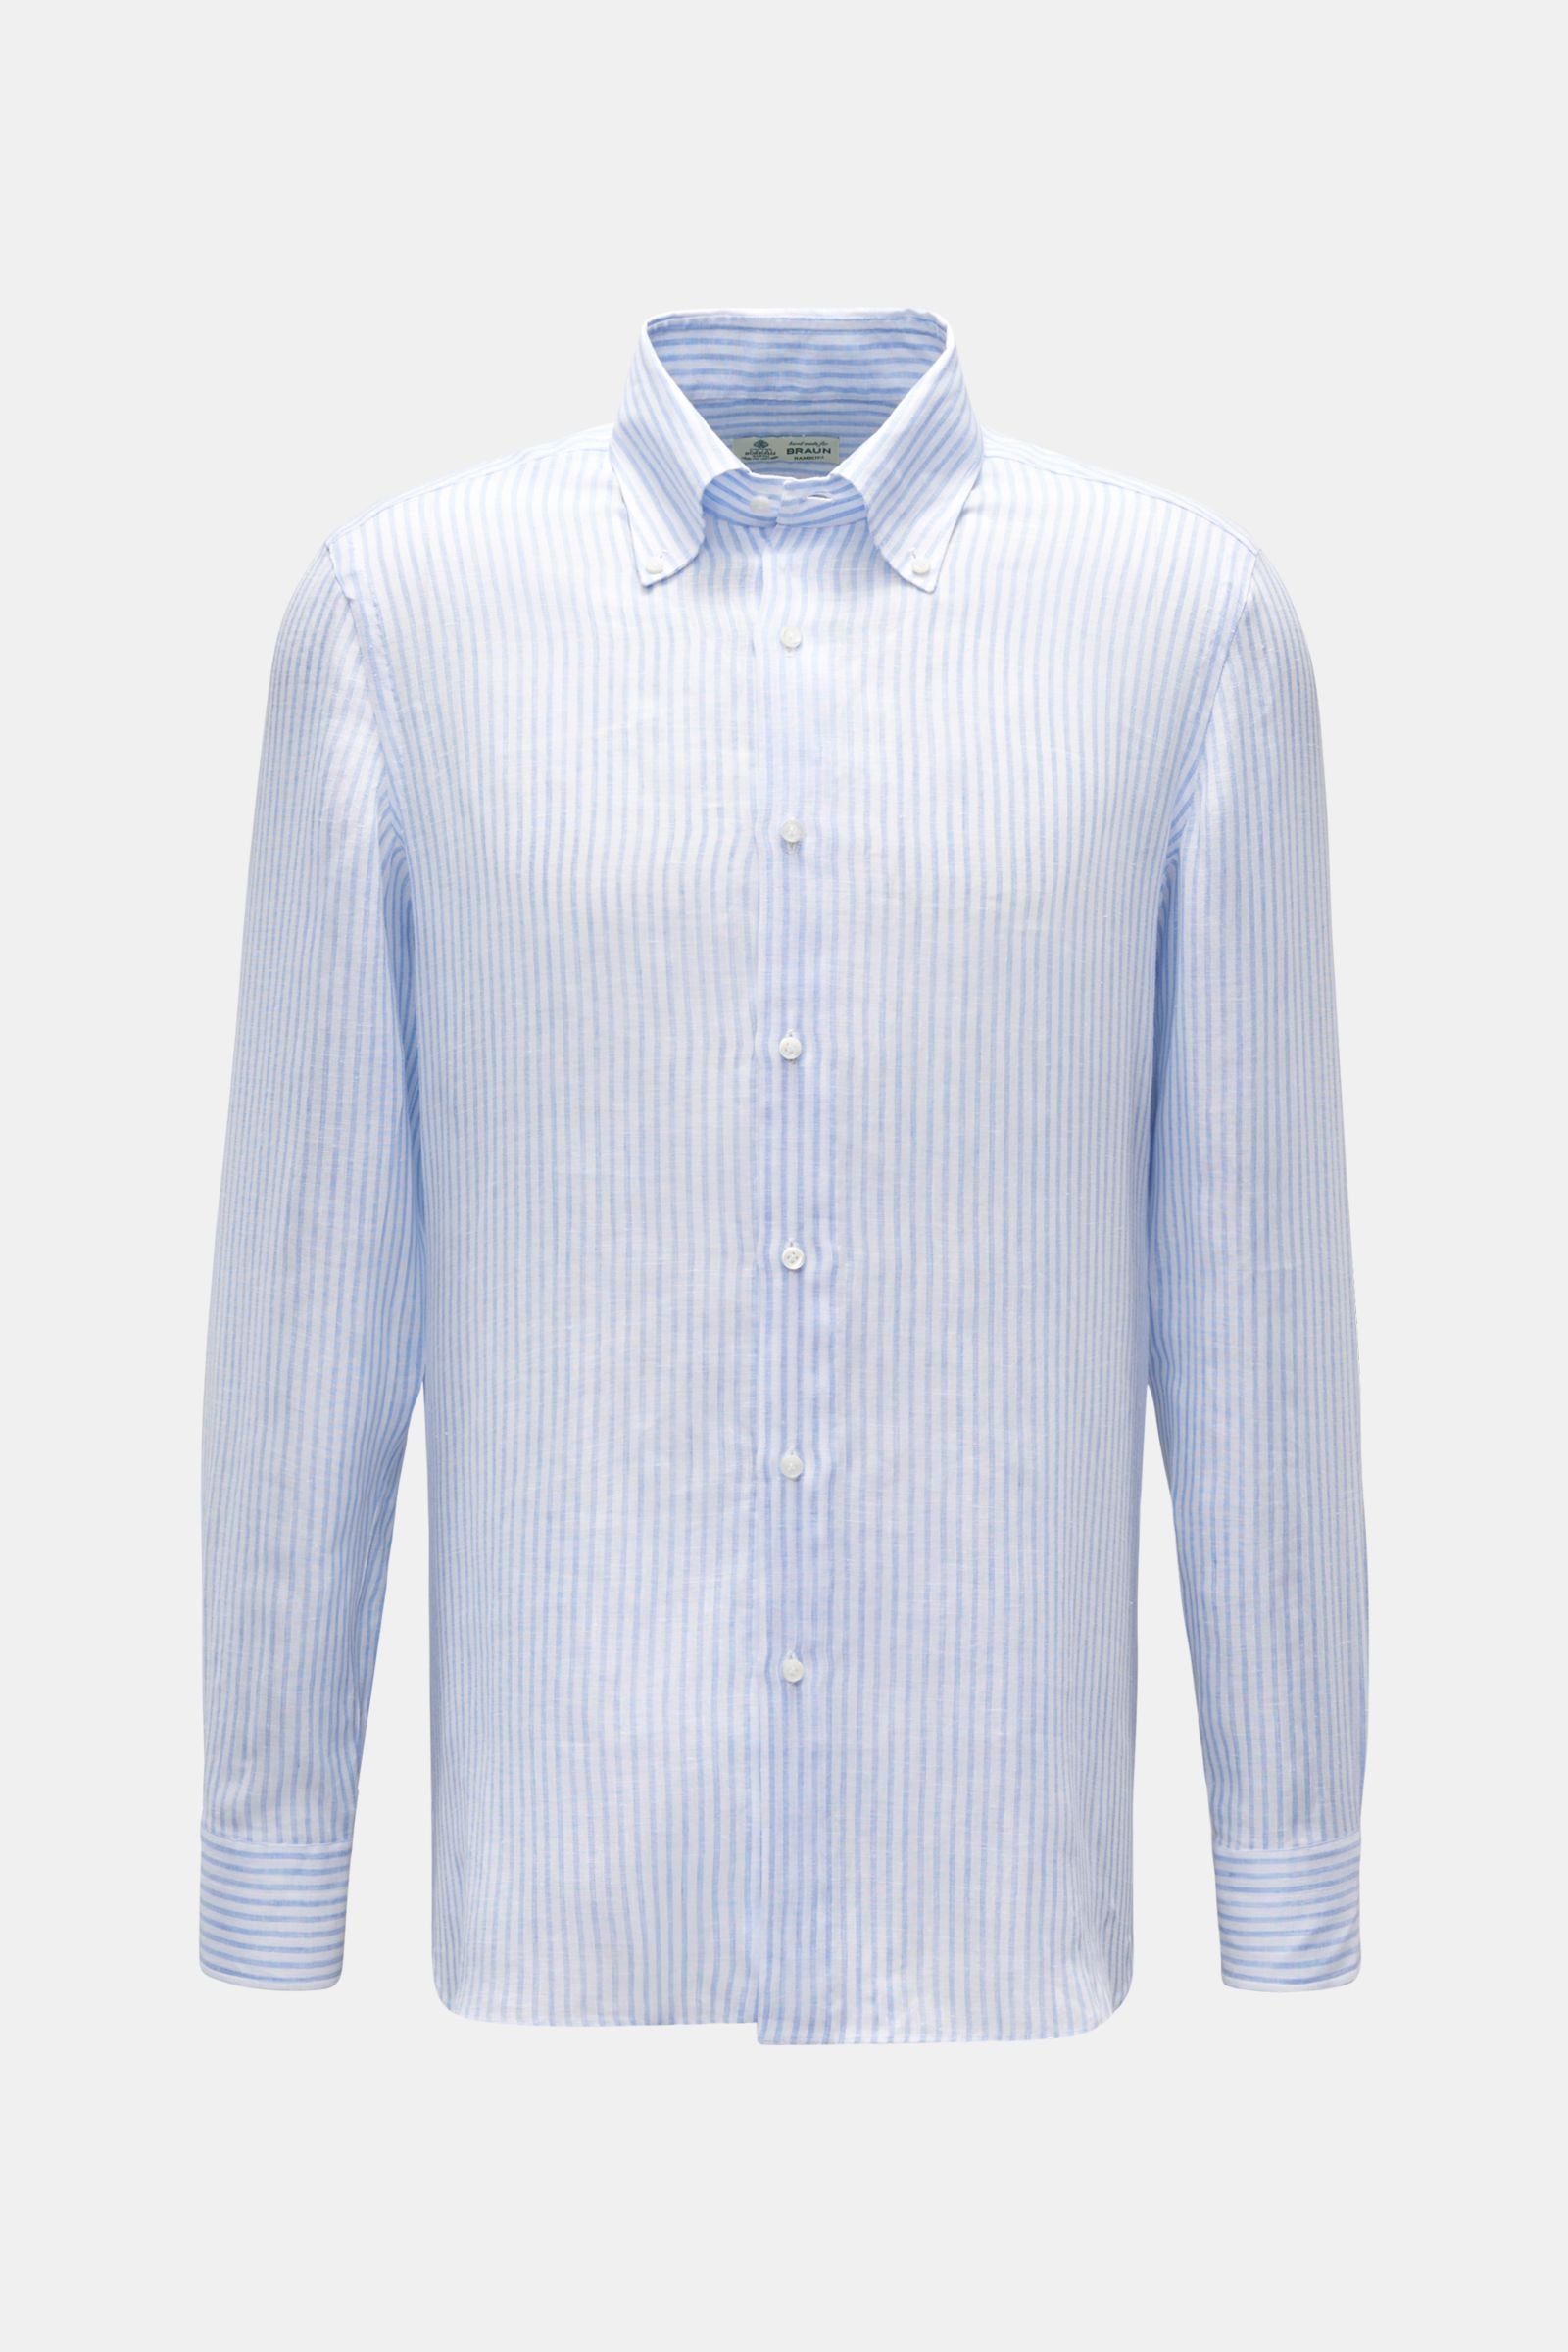 Linen shirt 'Gable' button-down collar light blue/white striped